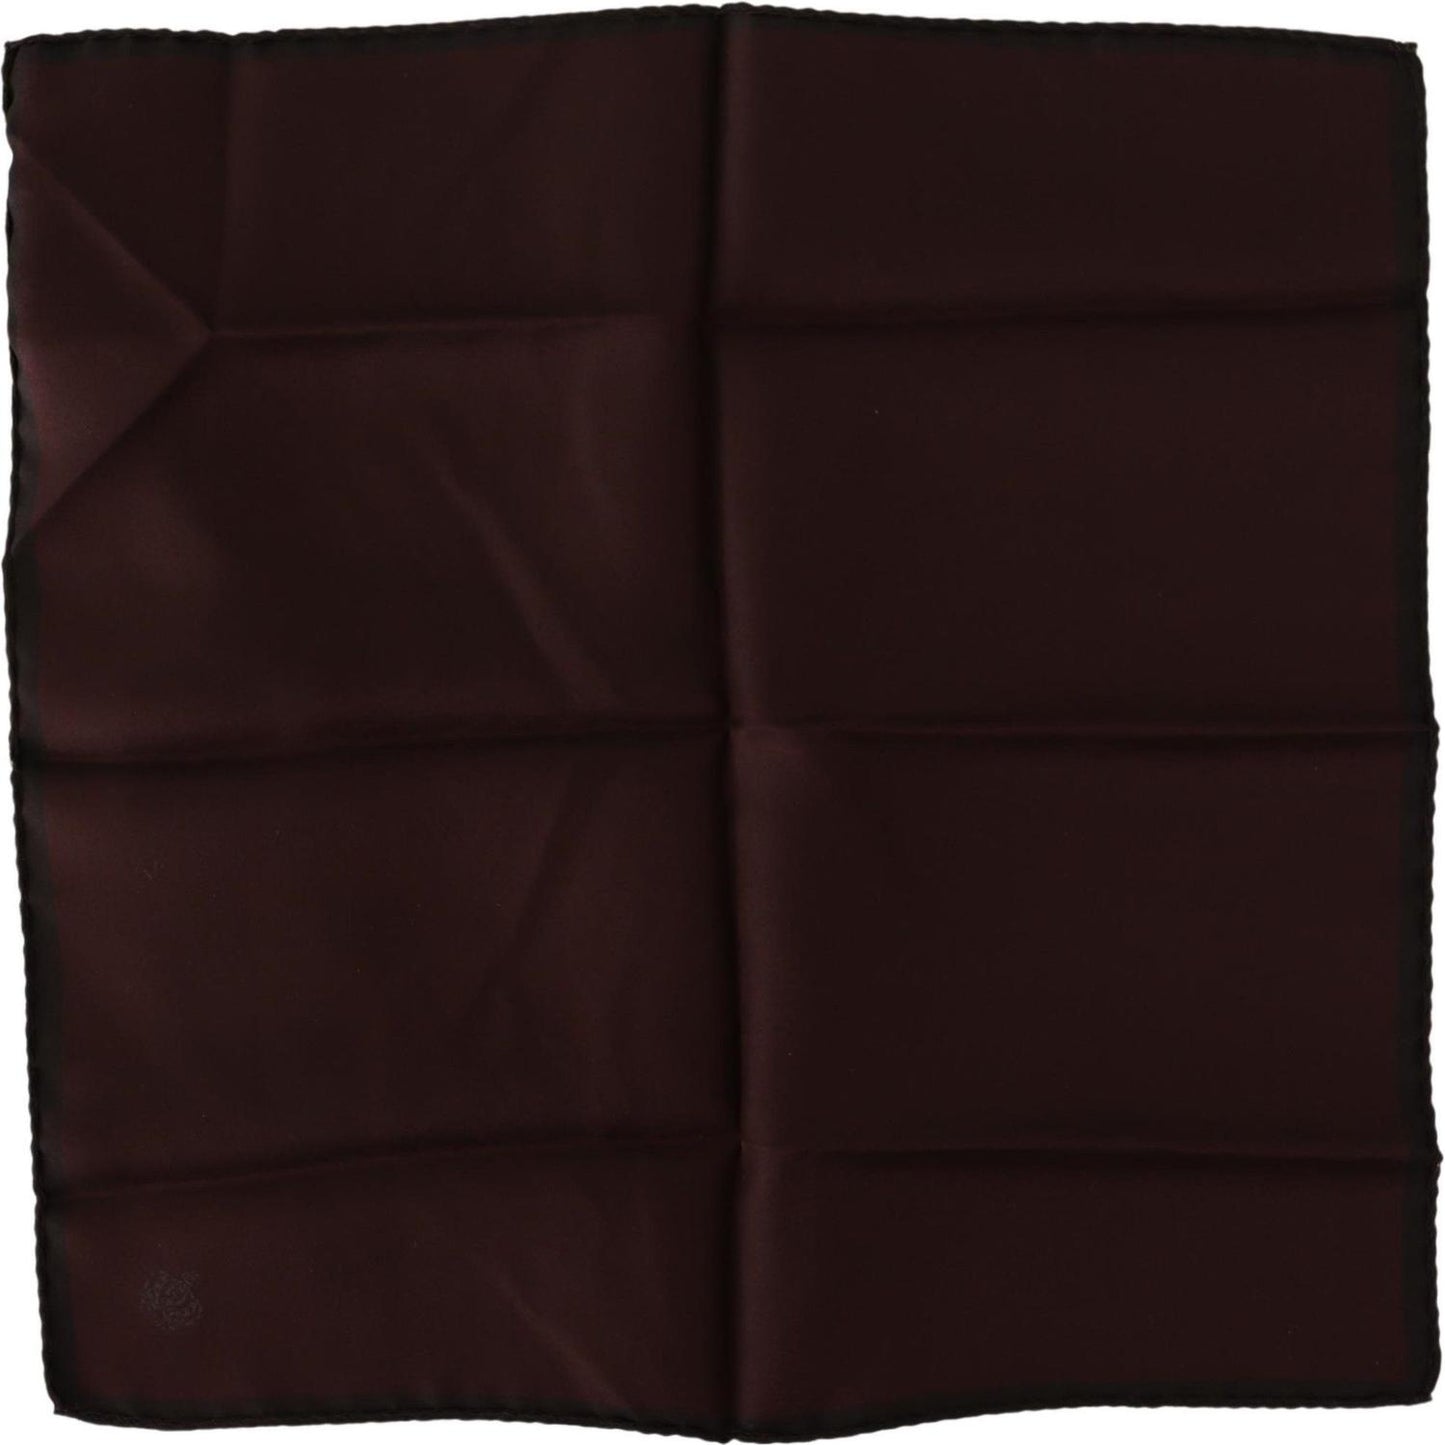 Dolce & Gabbana Maroon Square Handkerchief 100% Silk Scarf maroon-square-handkerchief-100-silk-scarf IMG_8310-25854f68-bcd.jpg